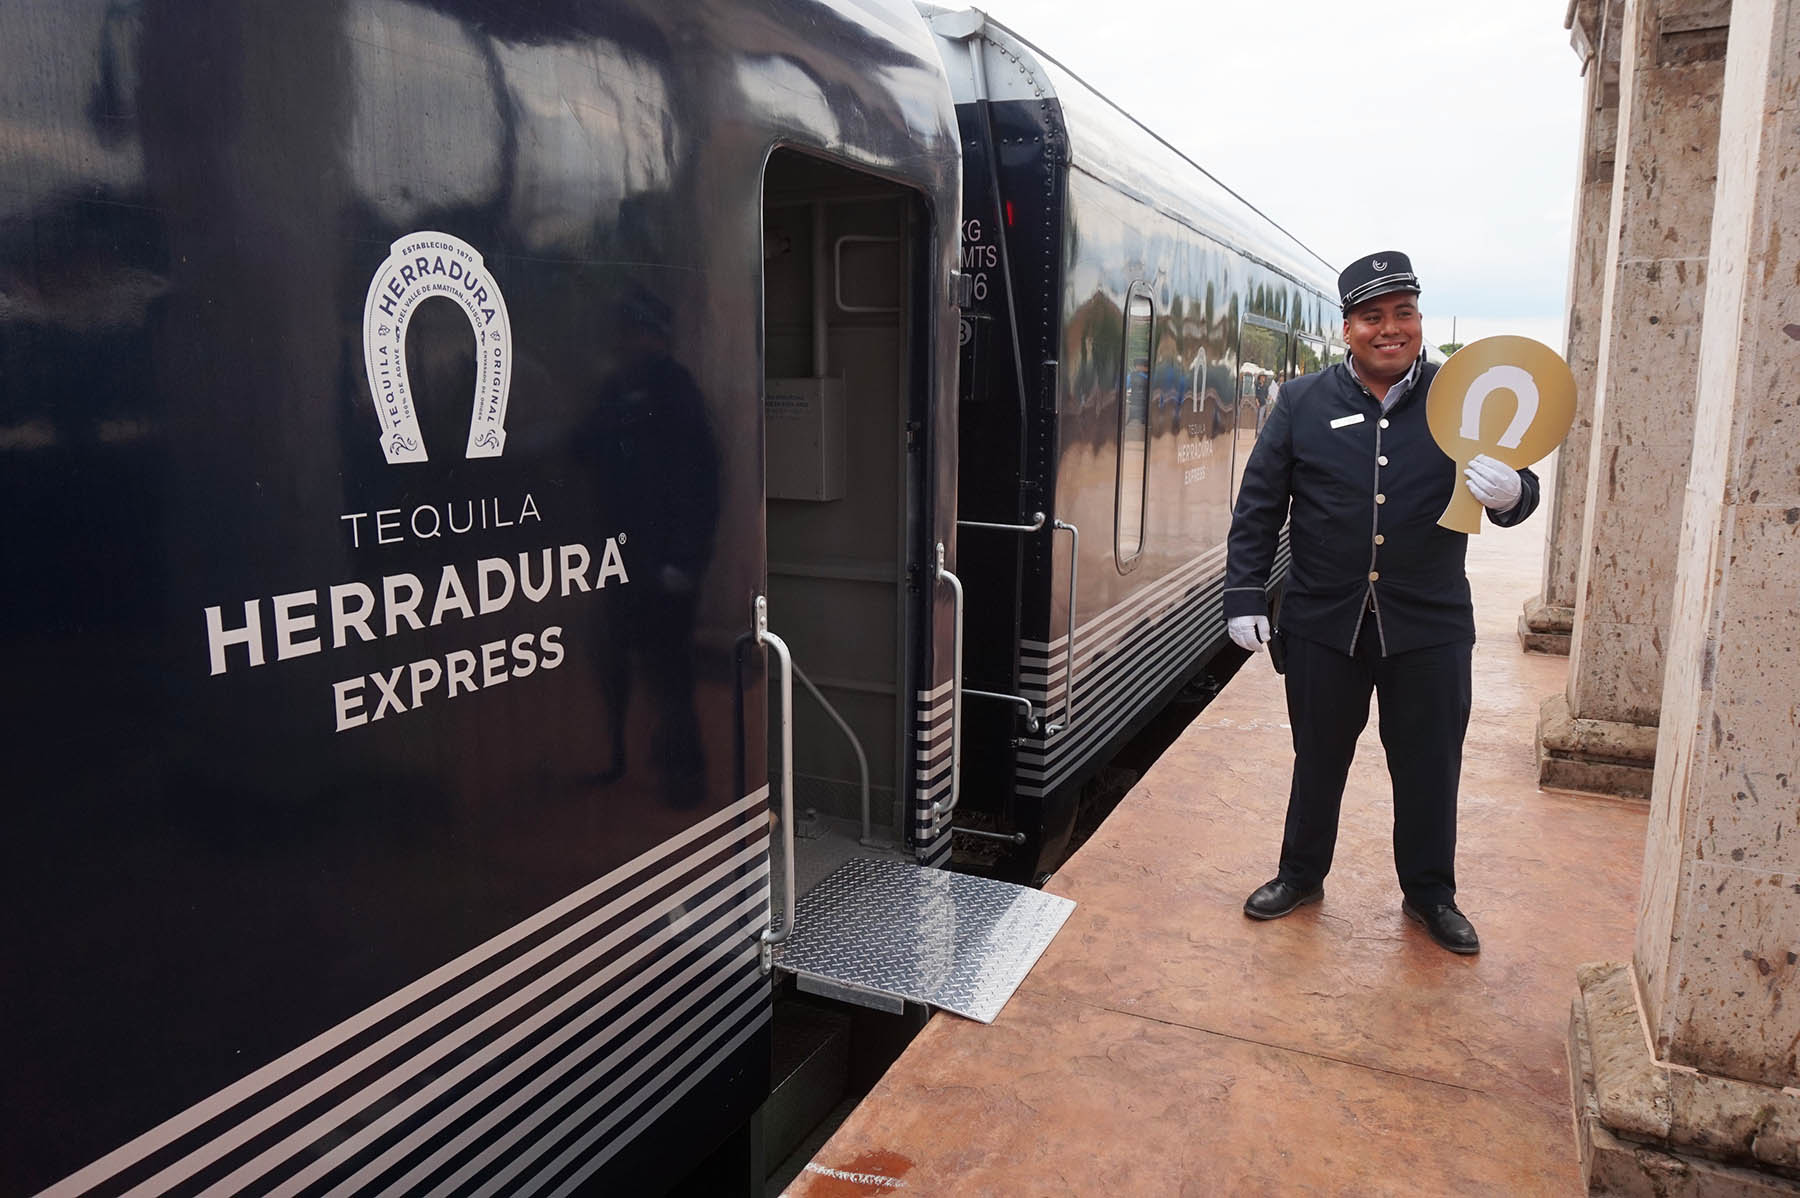 tequila express train tour